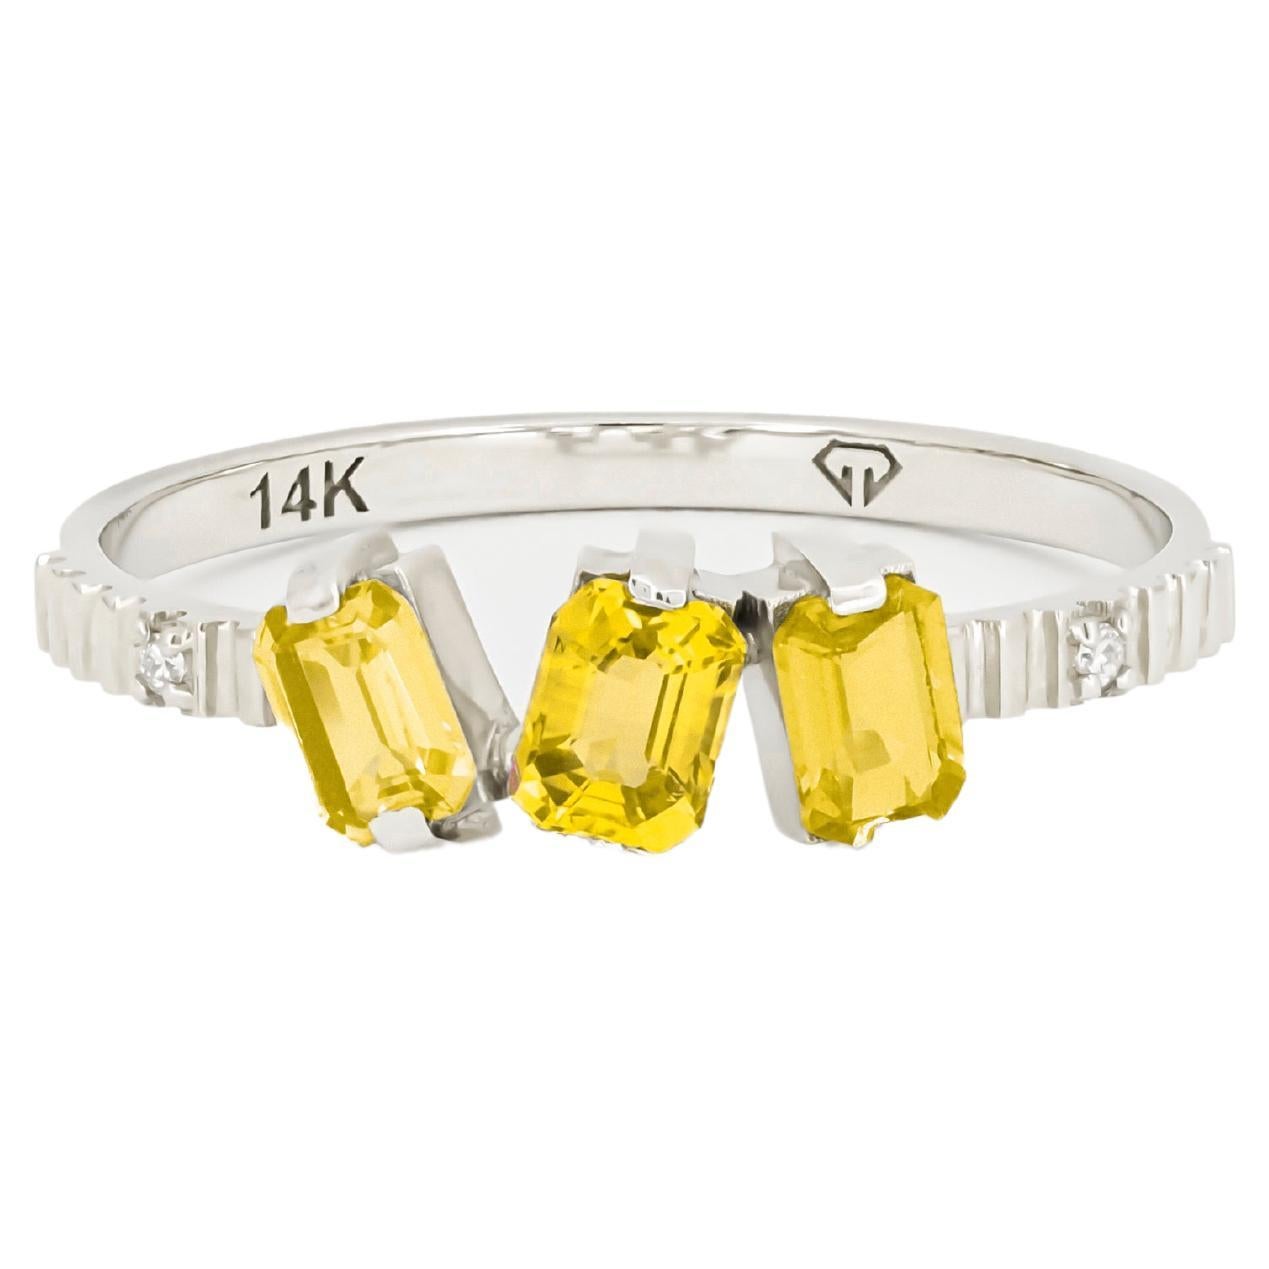 For Sale:  Monochrome yellow gemstone 14k ring.